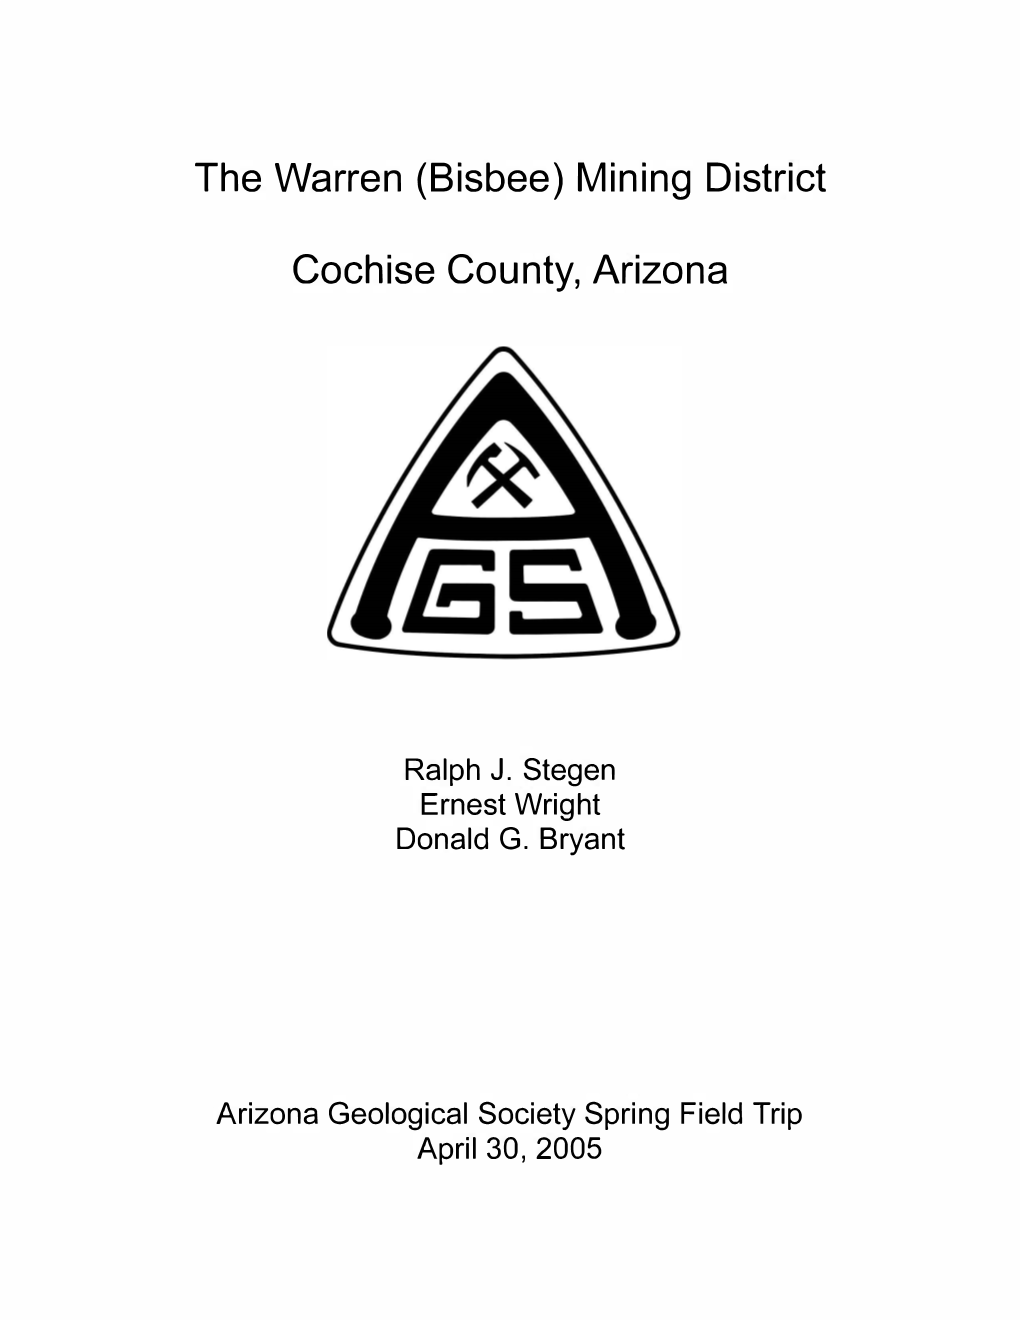 Bisbee) Mining District